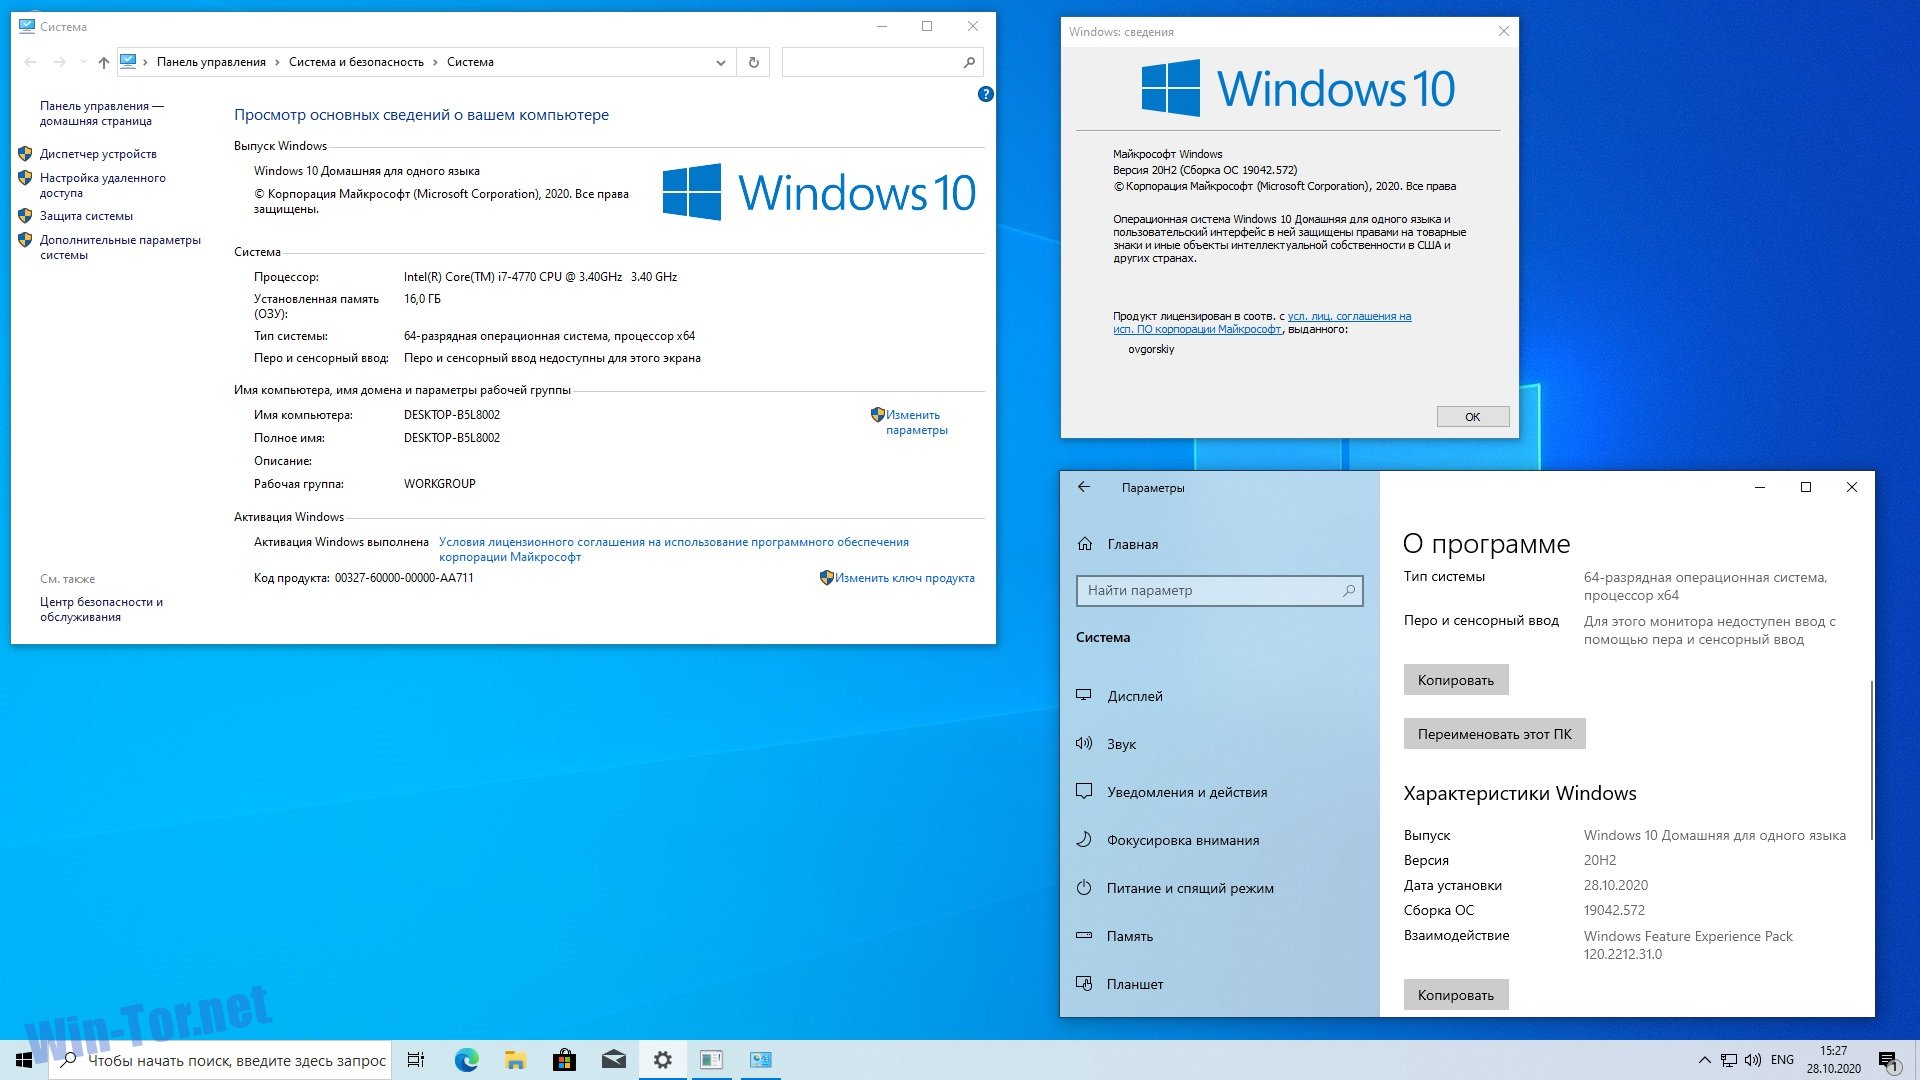 Windows 10 professional VL x86-x64 20h2 ru by OVGORSKIY октябрь 2020. Windows 10 OVGORSKIY Edition. Операционная система Windows 10 build 1909. Виндовс 8.1 embedded industry Pro.